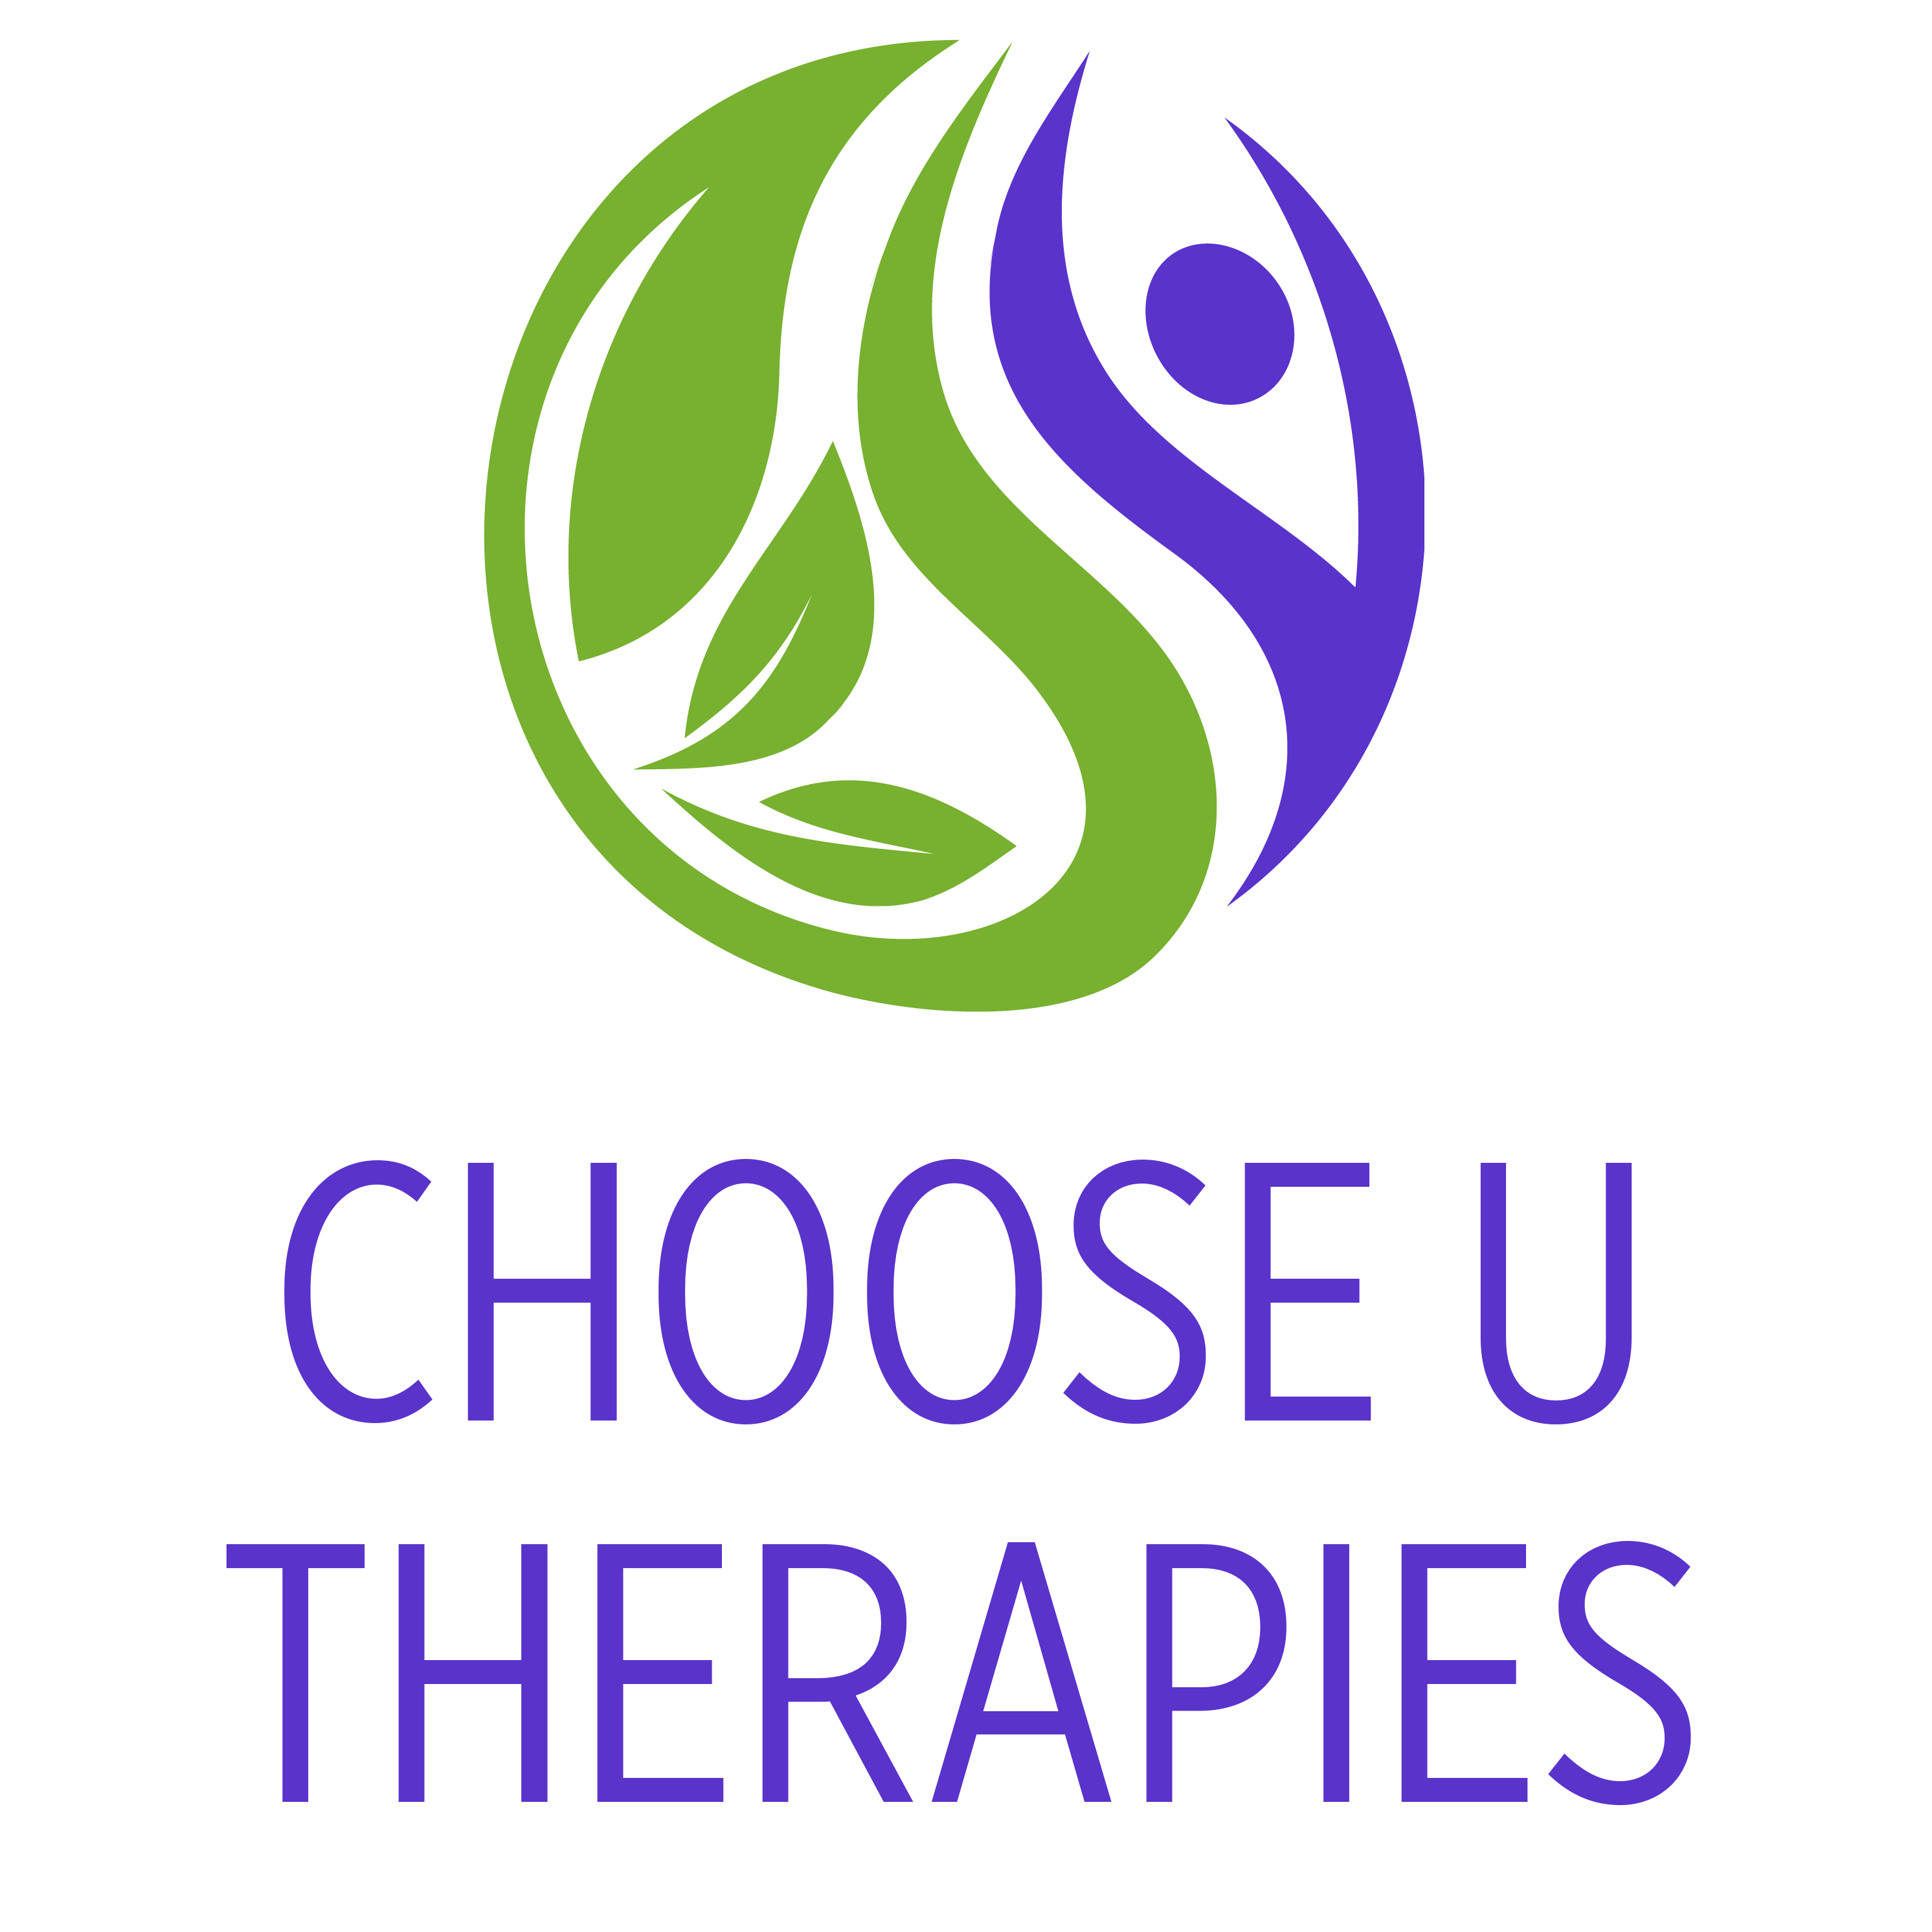 Choose U Therapies